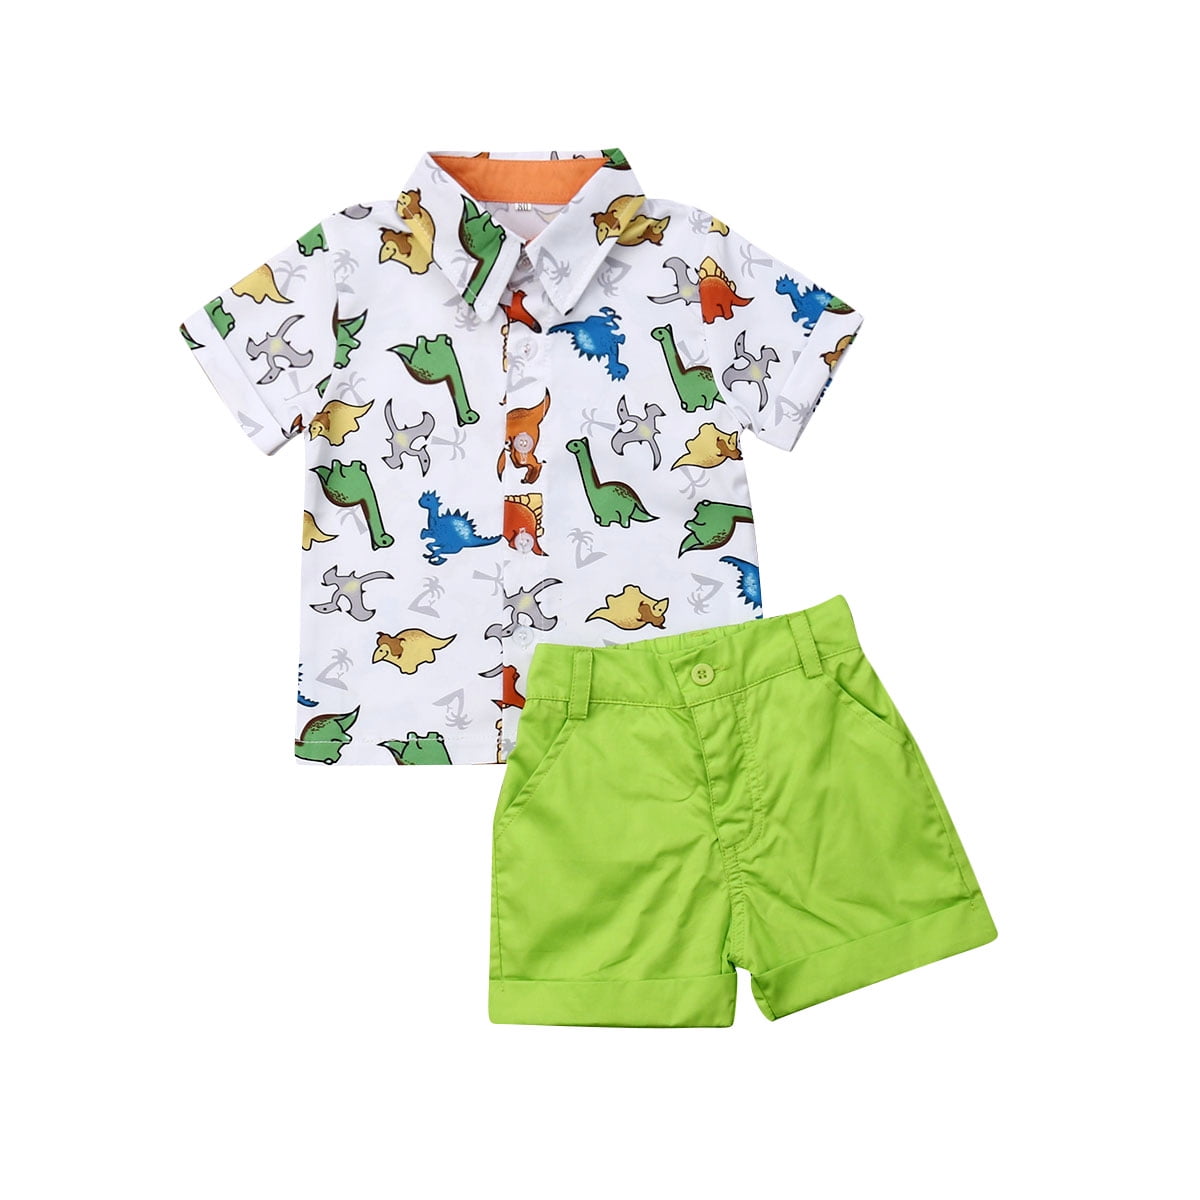 Toddler Baby Boy Dinosaur Shirt Top Short Pants Gentleman Summer 2Pcs Outfit Set 